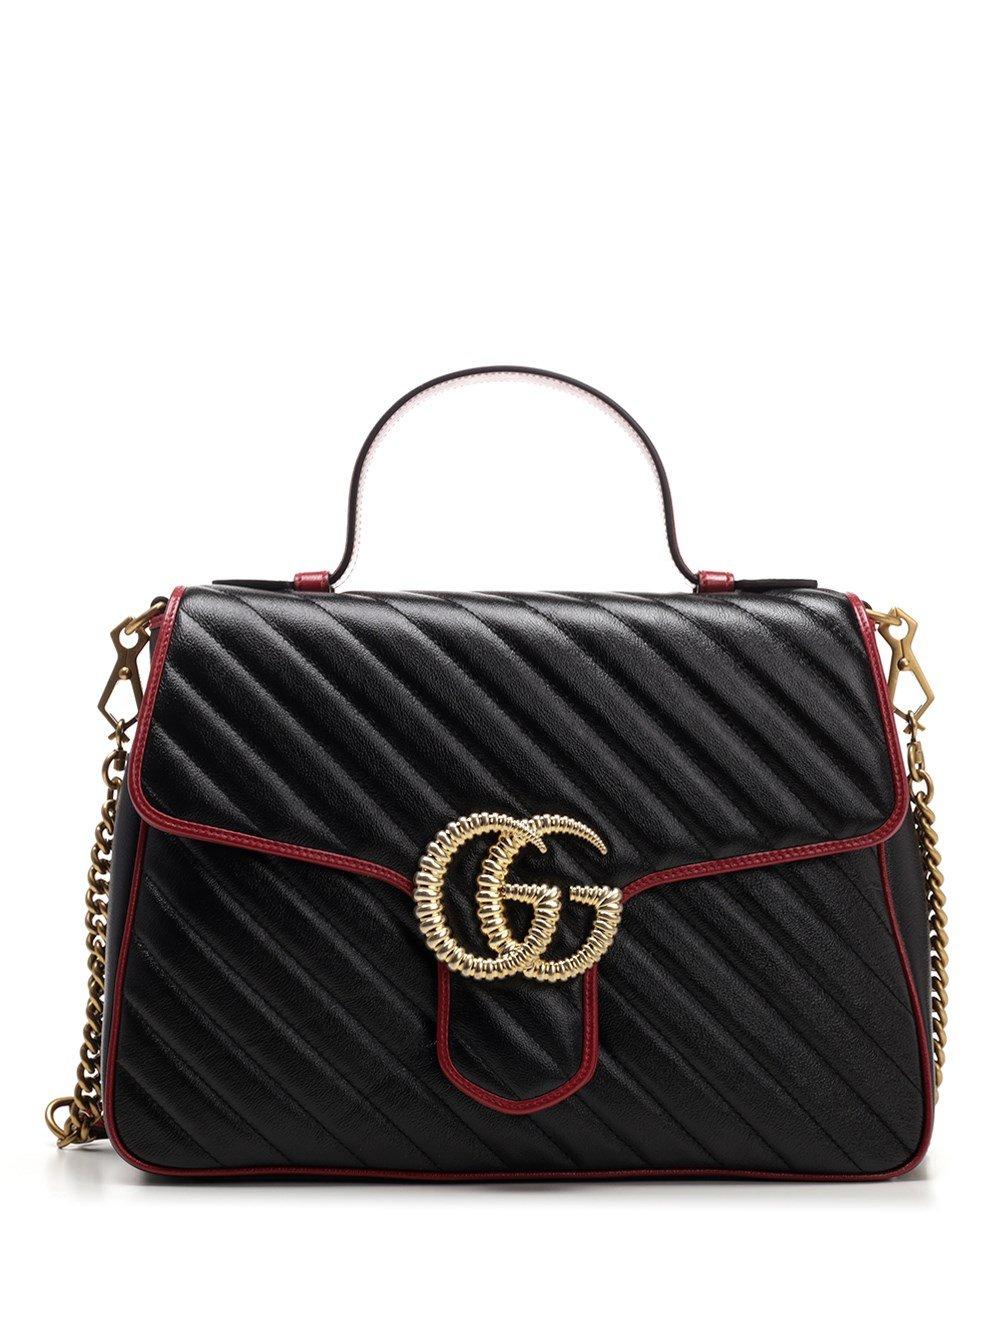 Gucci GG Marmont Medium Top Handle Tote Bag in Black